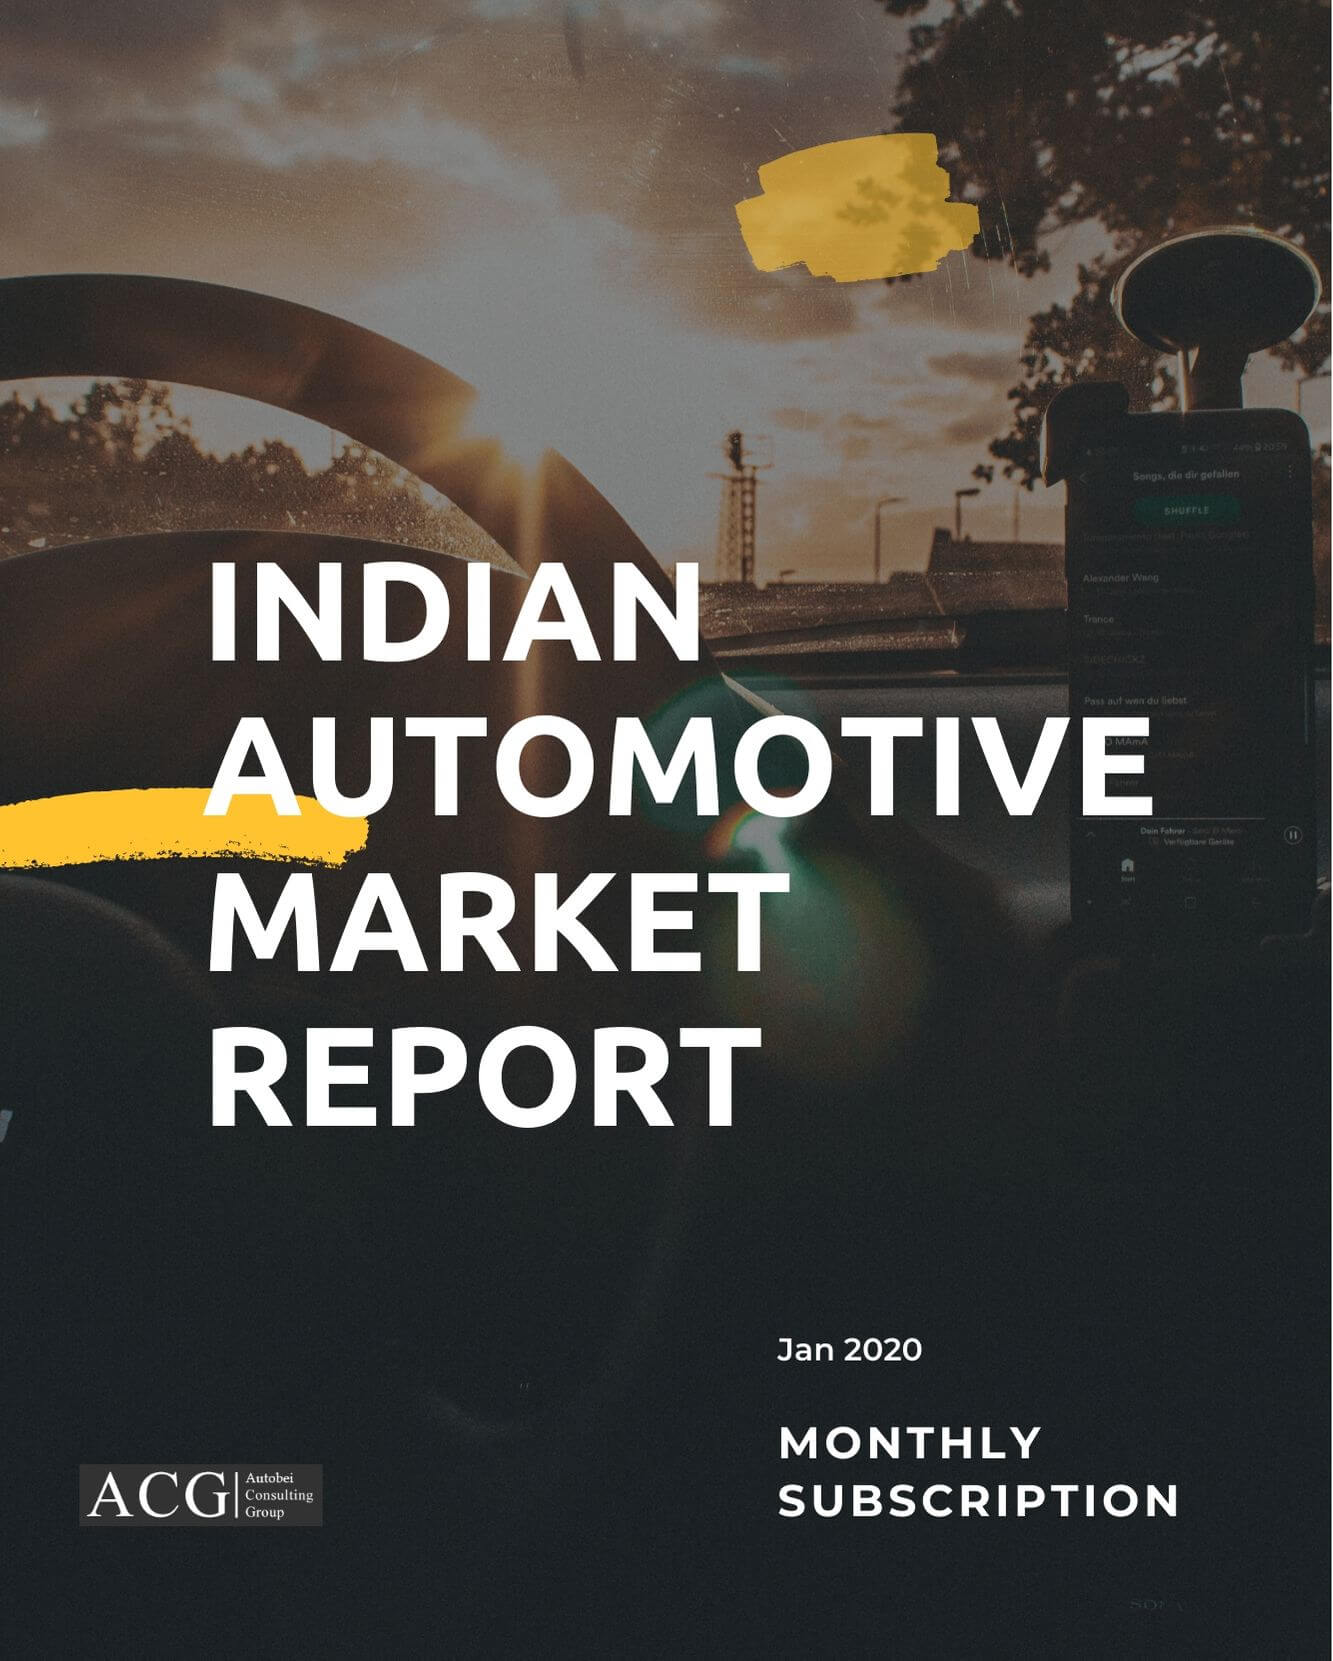 Indian Automotive market report Jan 2020